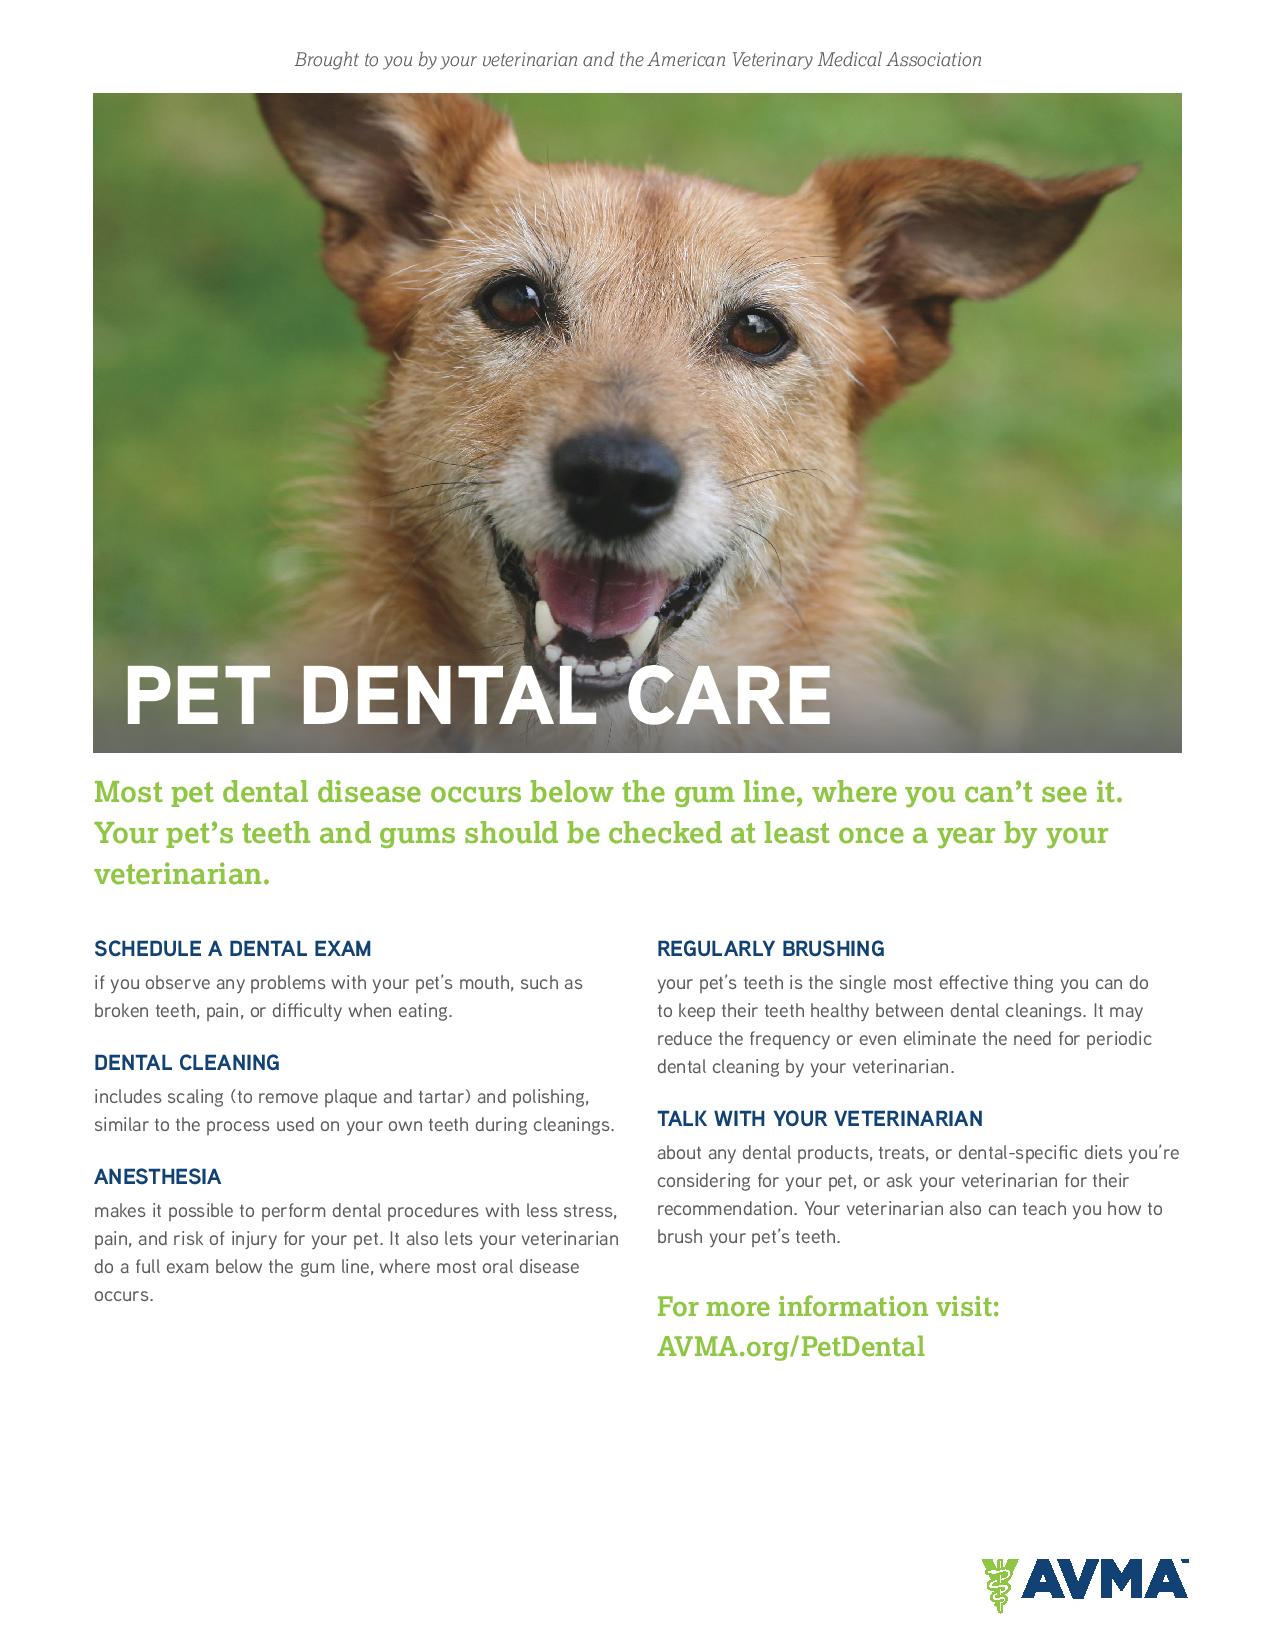 Pet Dental Care Handout